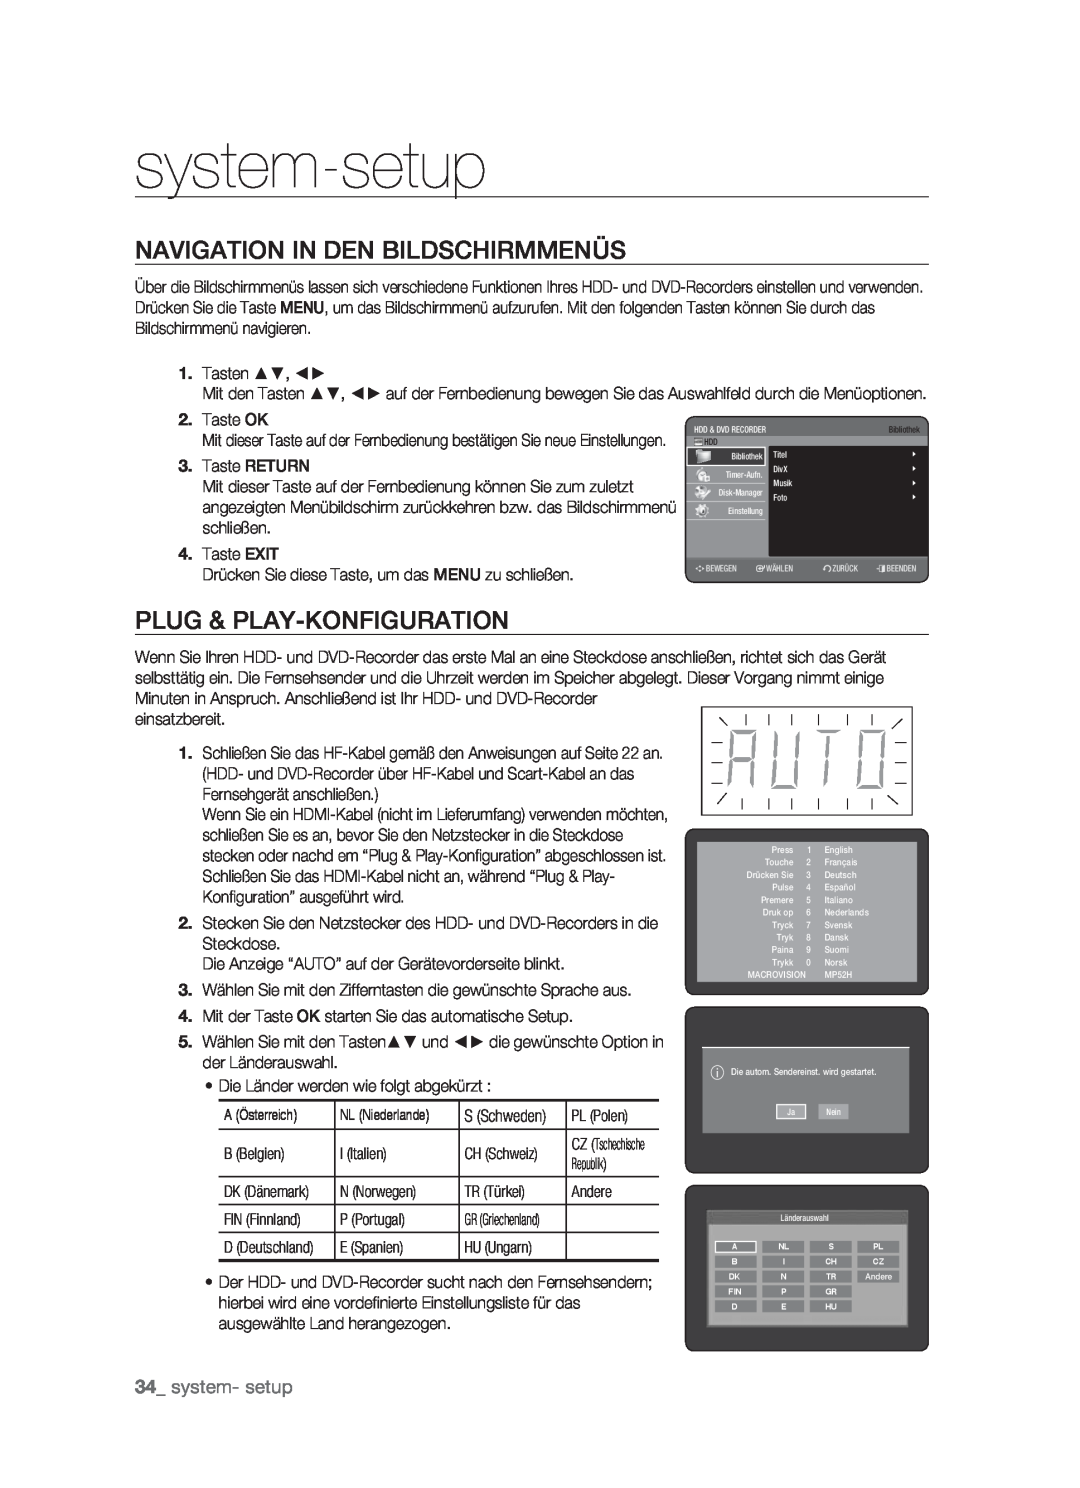 Samsung DVD-HR773/XEG manual system-setup, Navigation In Den Bildschirmmenüs, Plug & Play-Konfiguration, system- setup 